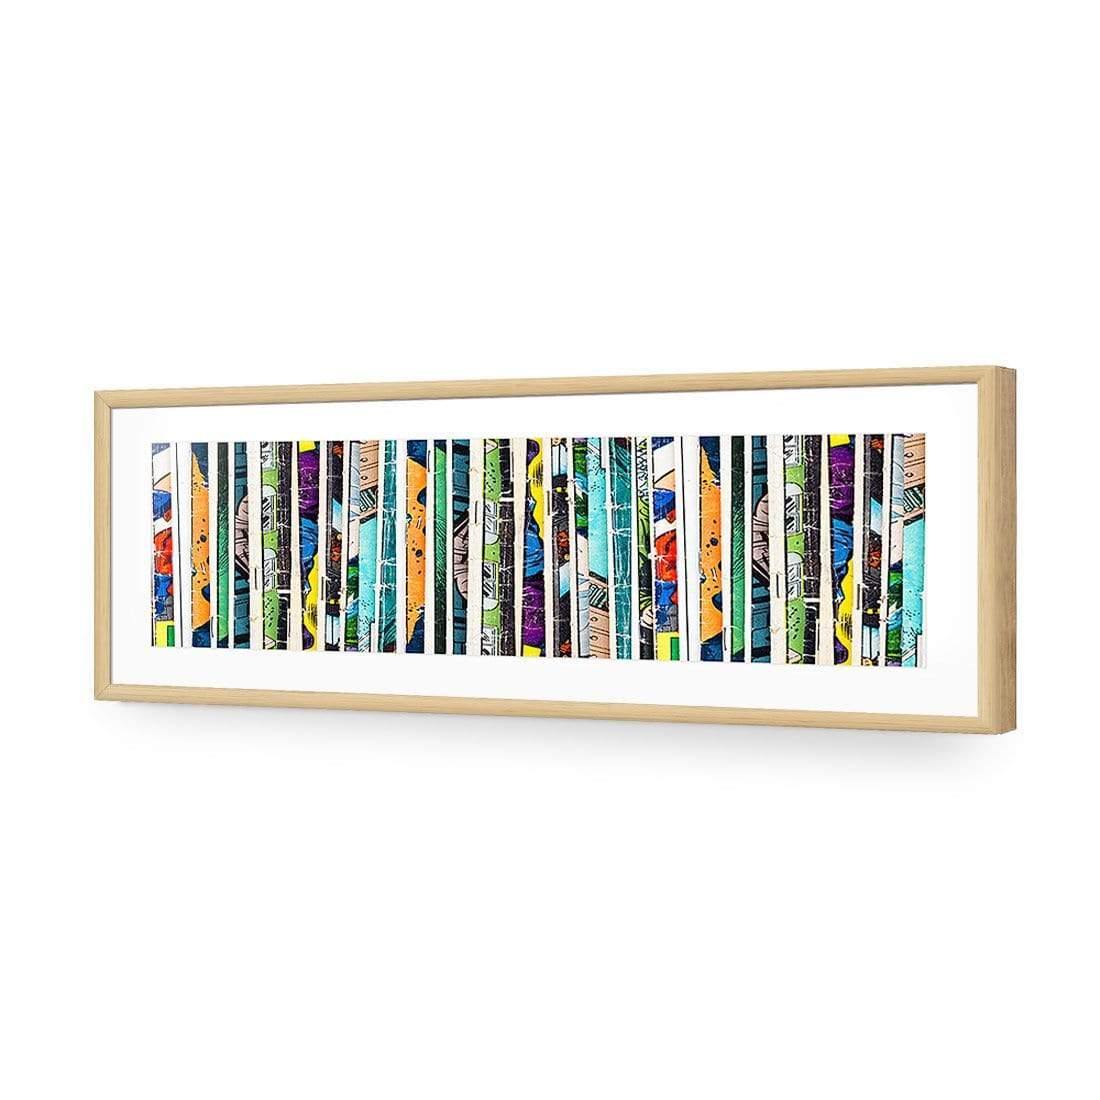 Book Spines (long) - wallart-australia - Acrylic Glass With Border